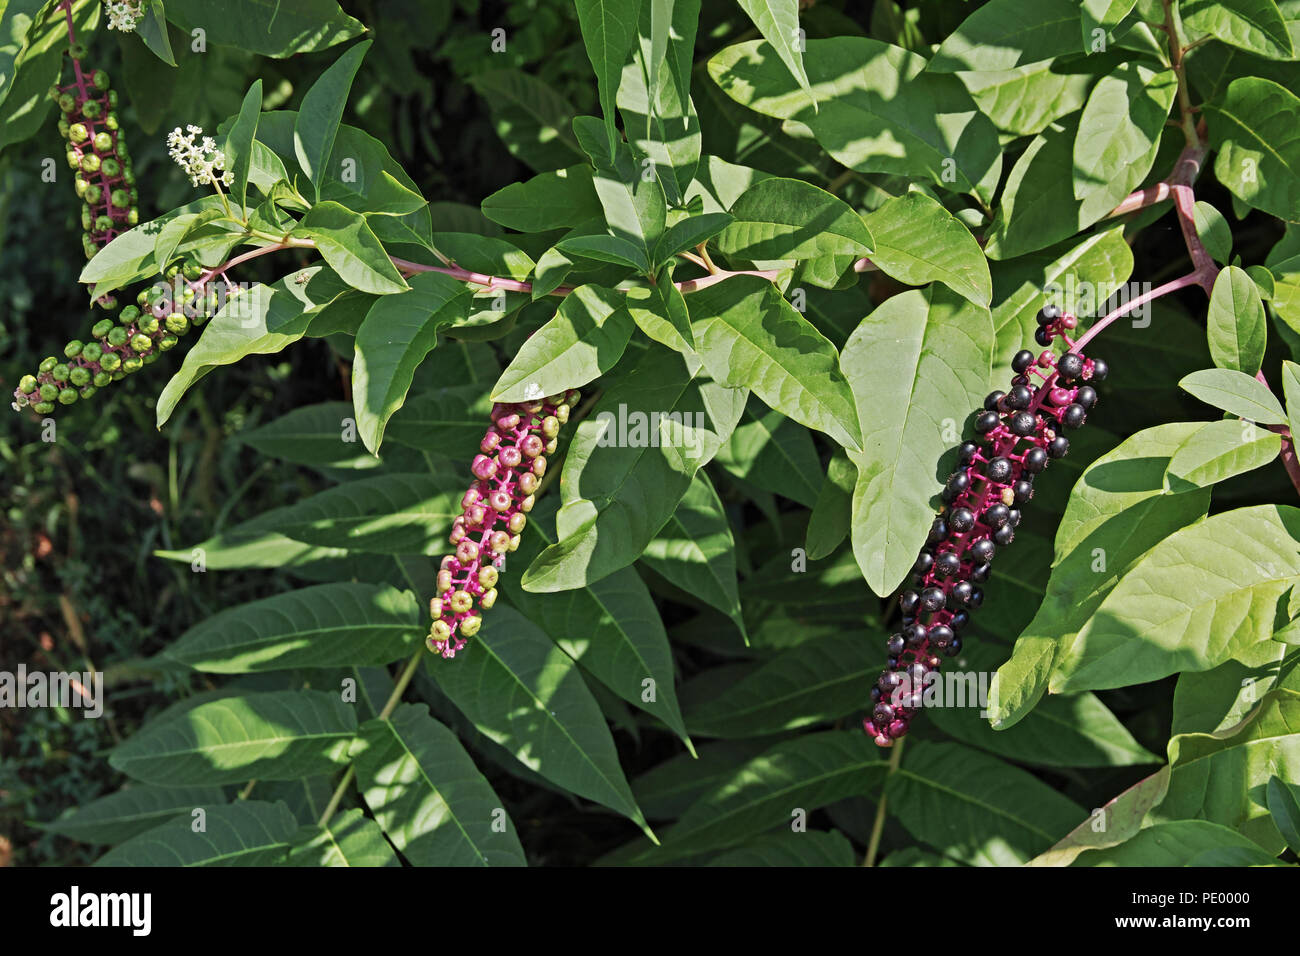 Phytolacca americana,american pokeweed, fogliame e mature e frutti immaturi Foto Stock